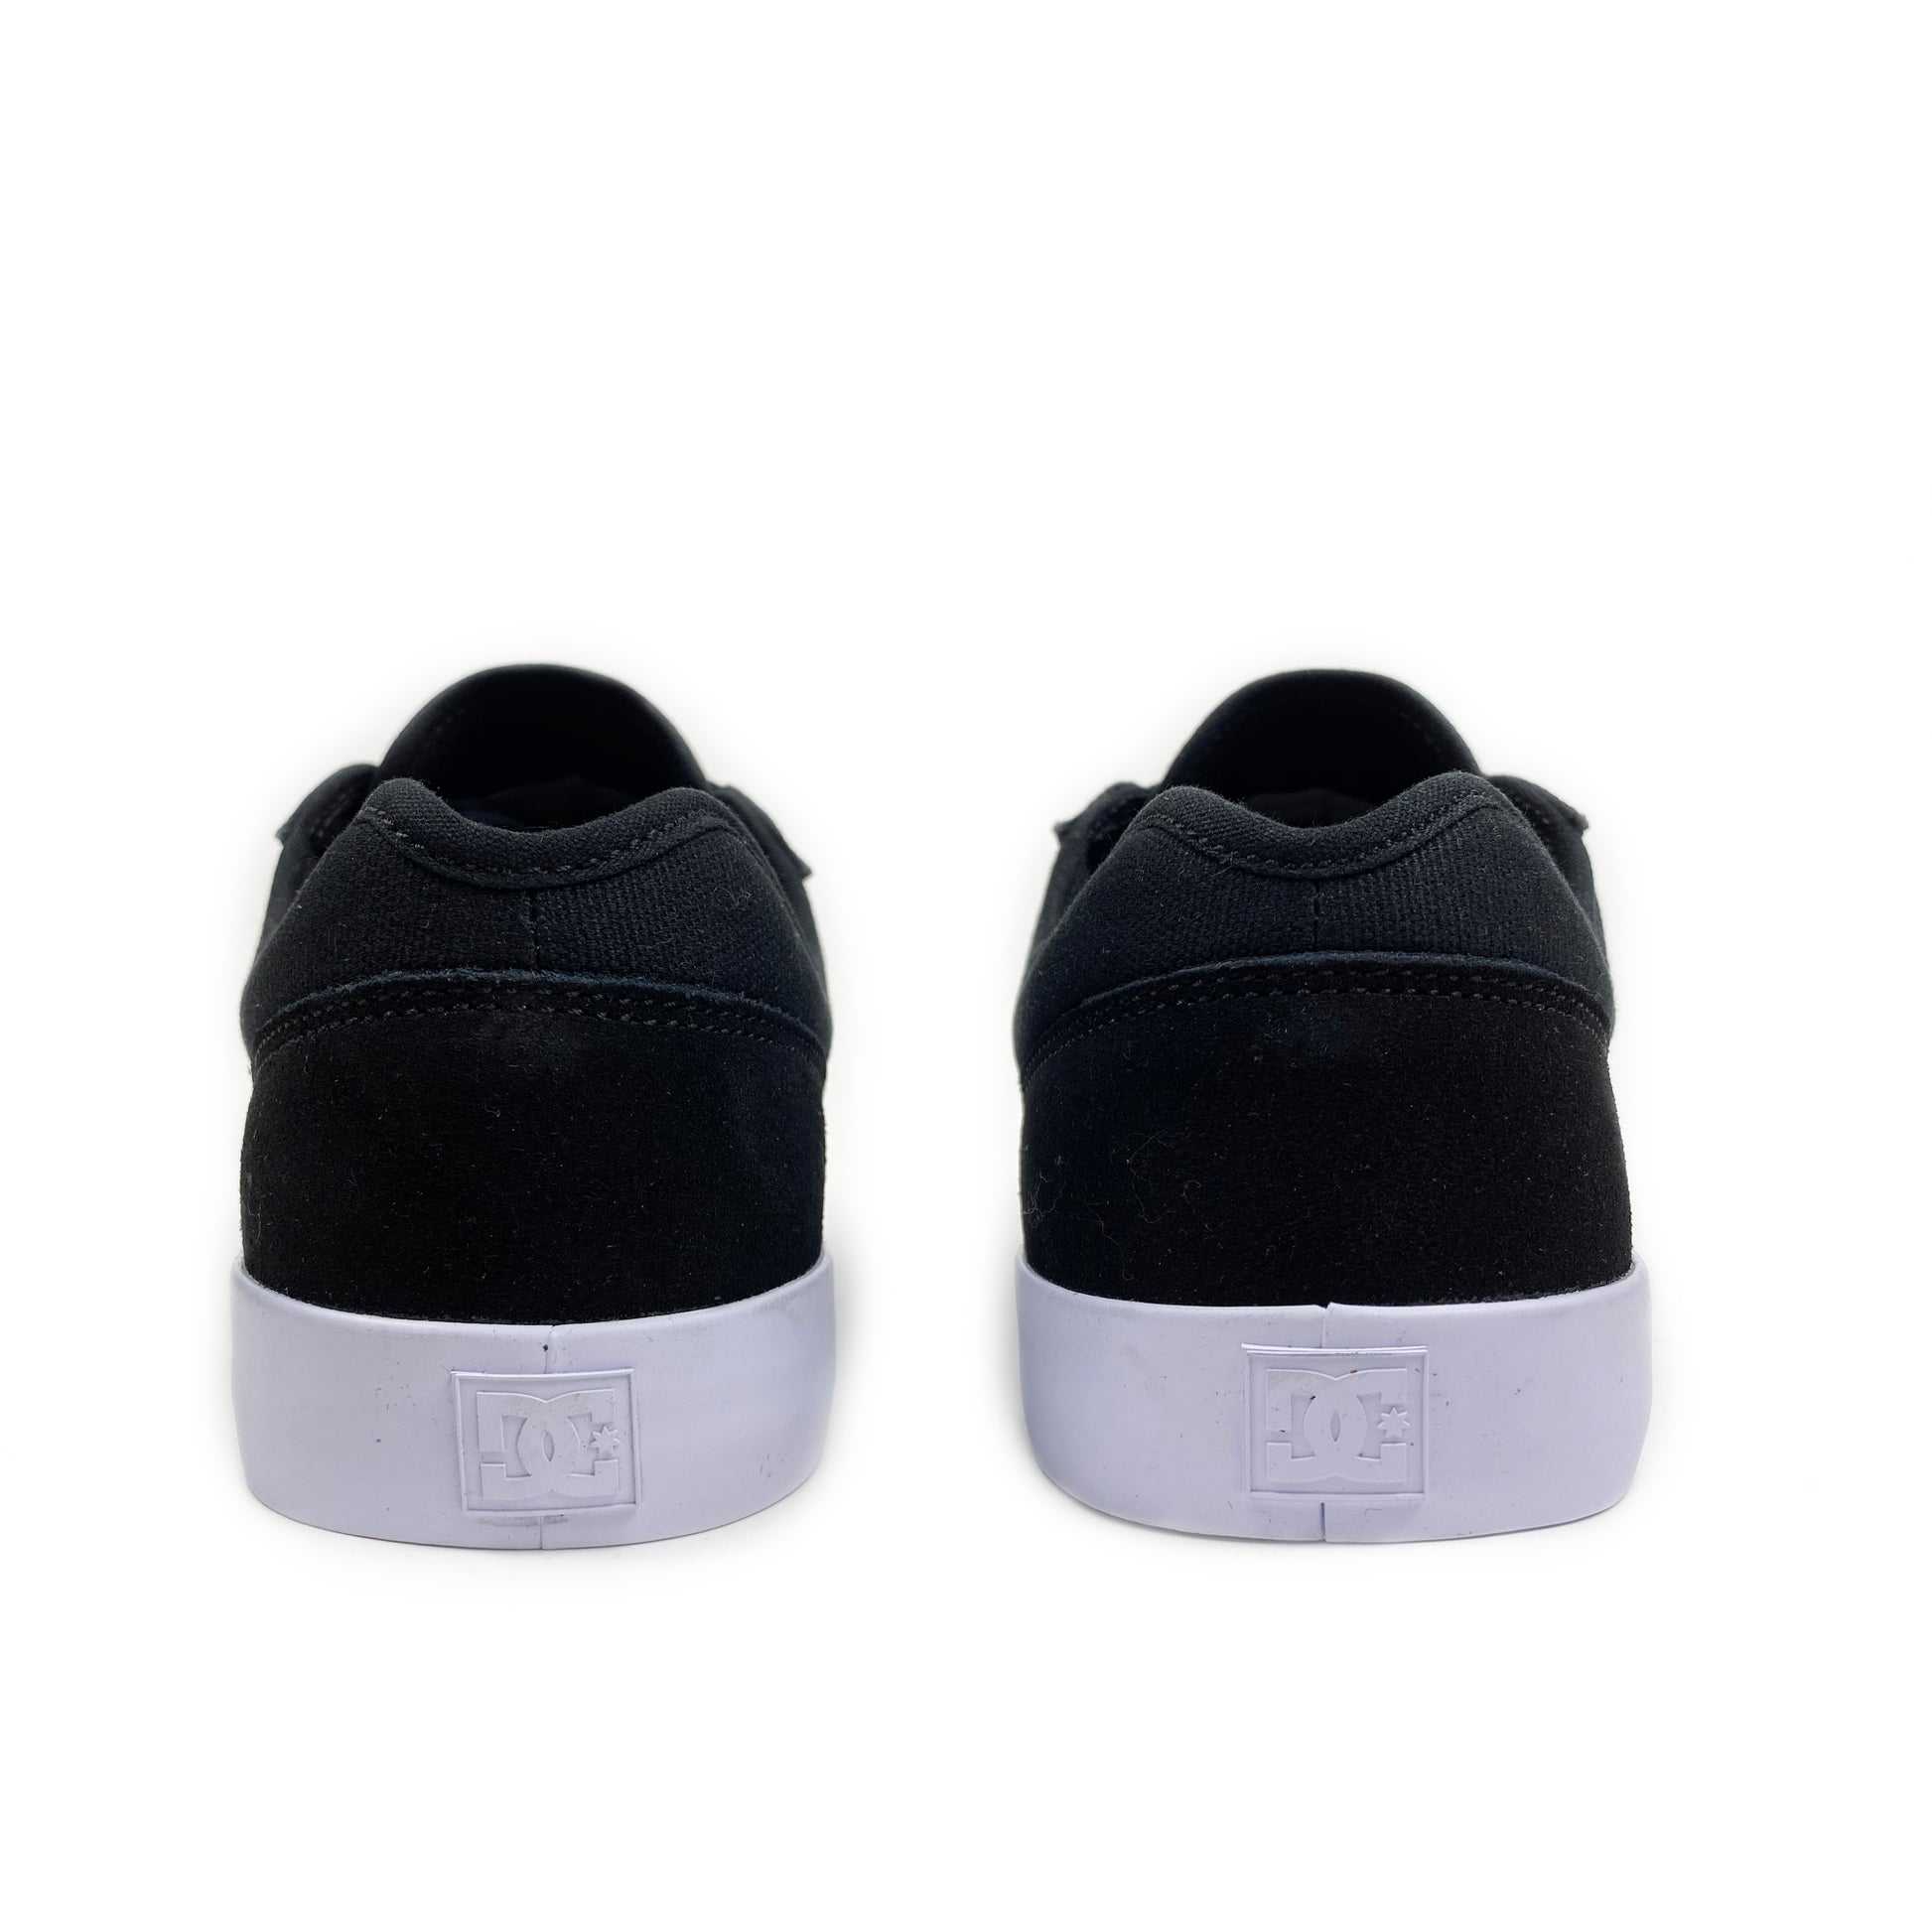 DC Tonik Shoes - Black / White / Black - Prime Delux Store